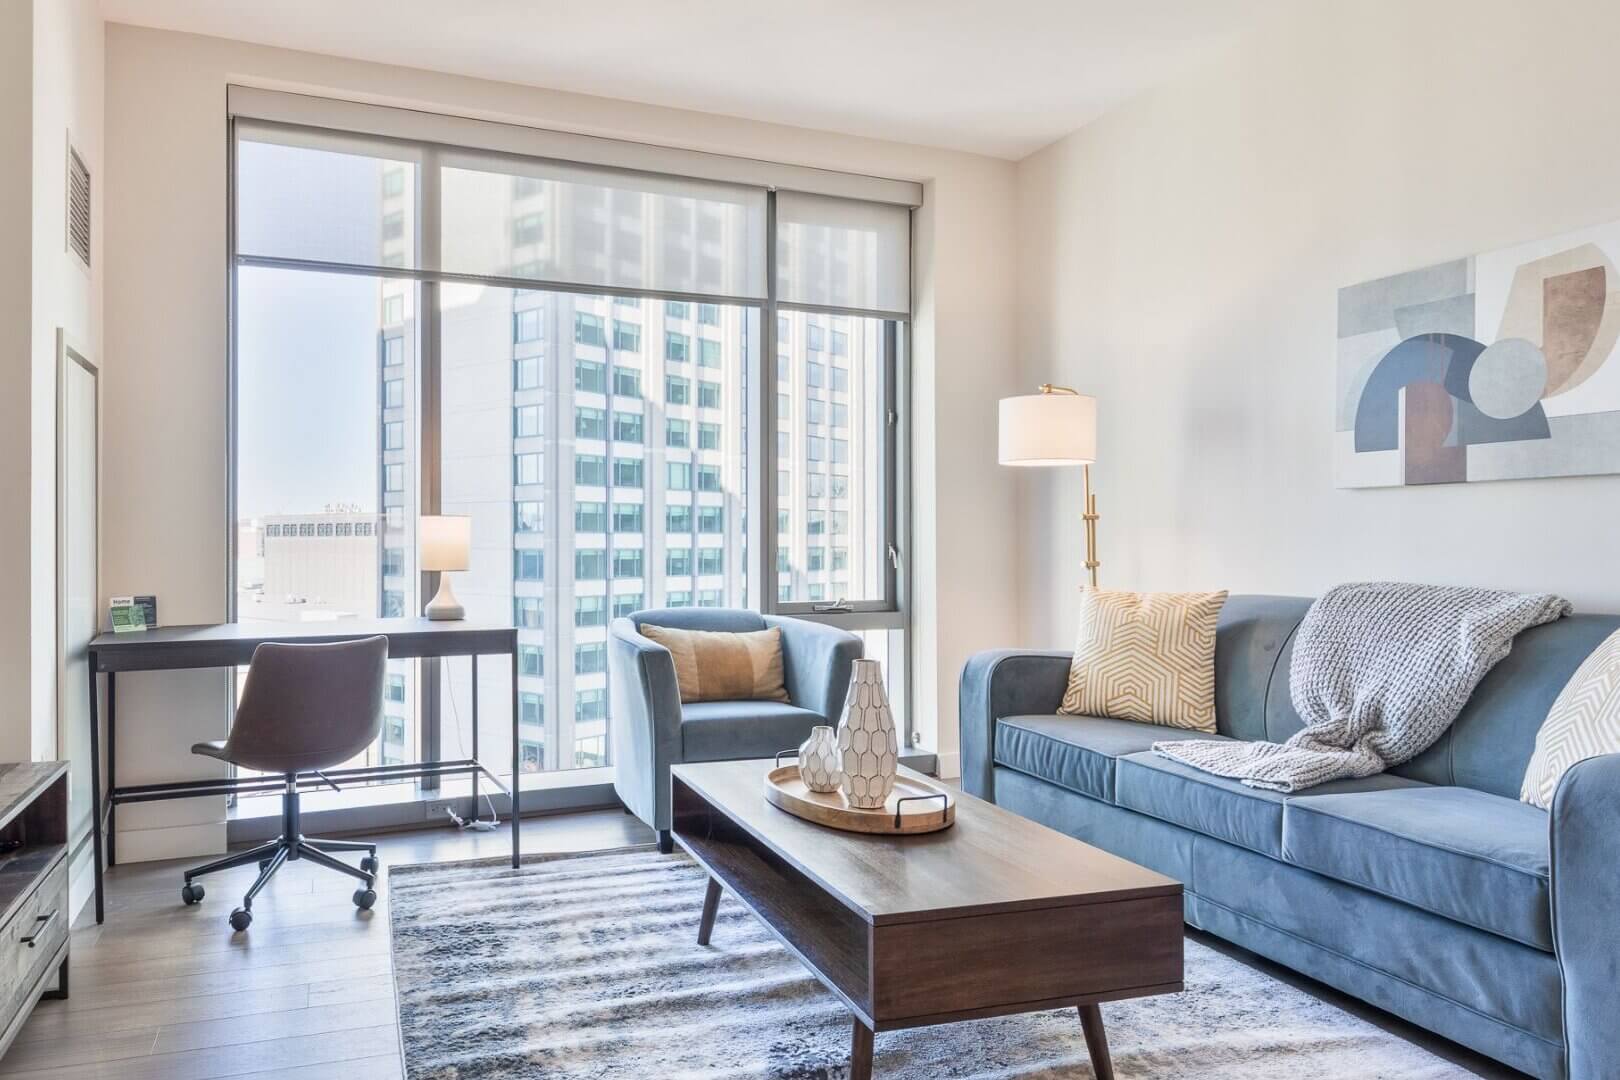 30 Dalton in Boston furnished apartment living room